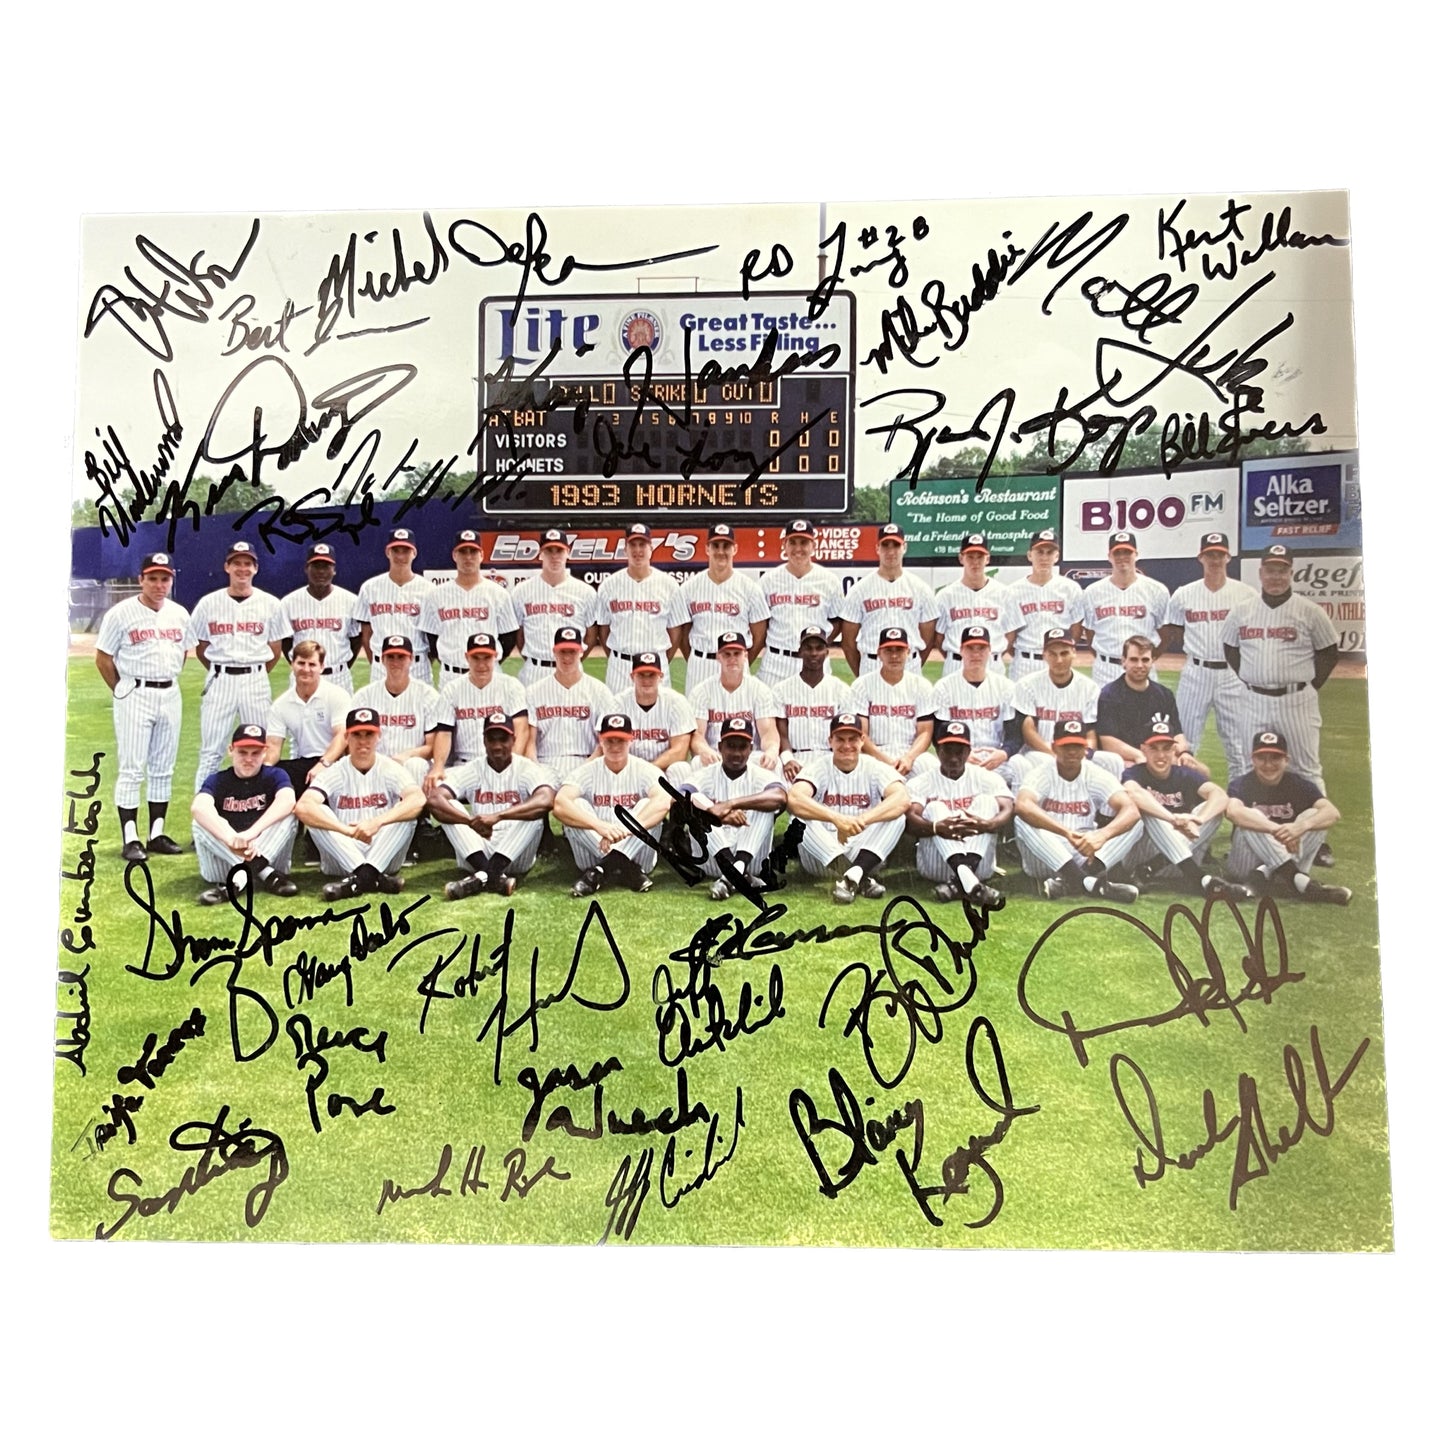 Derek Jeter Shane Spencer 1993 Hornets Team Autographed 8x10